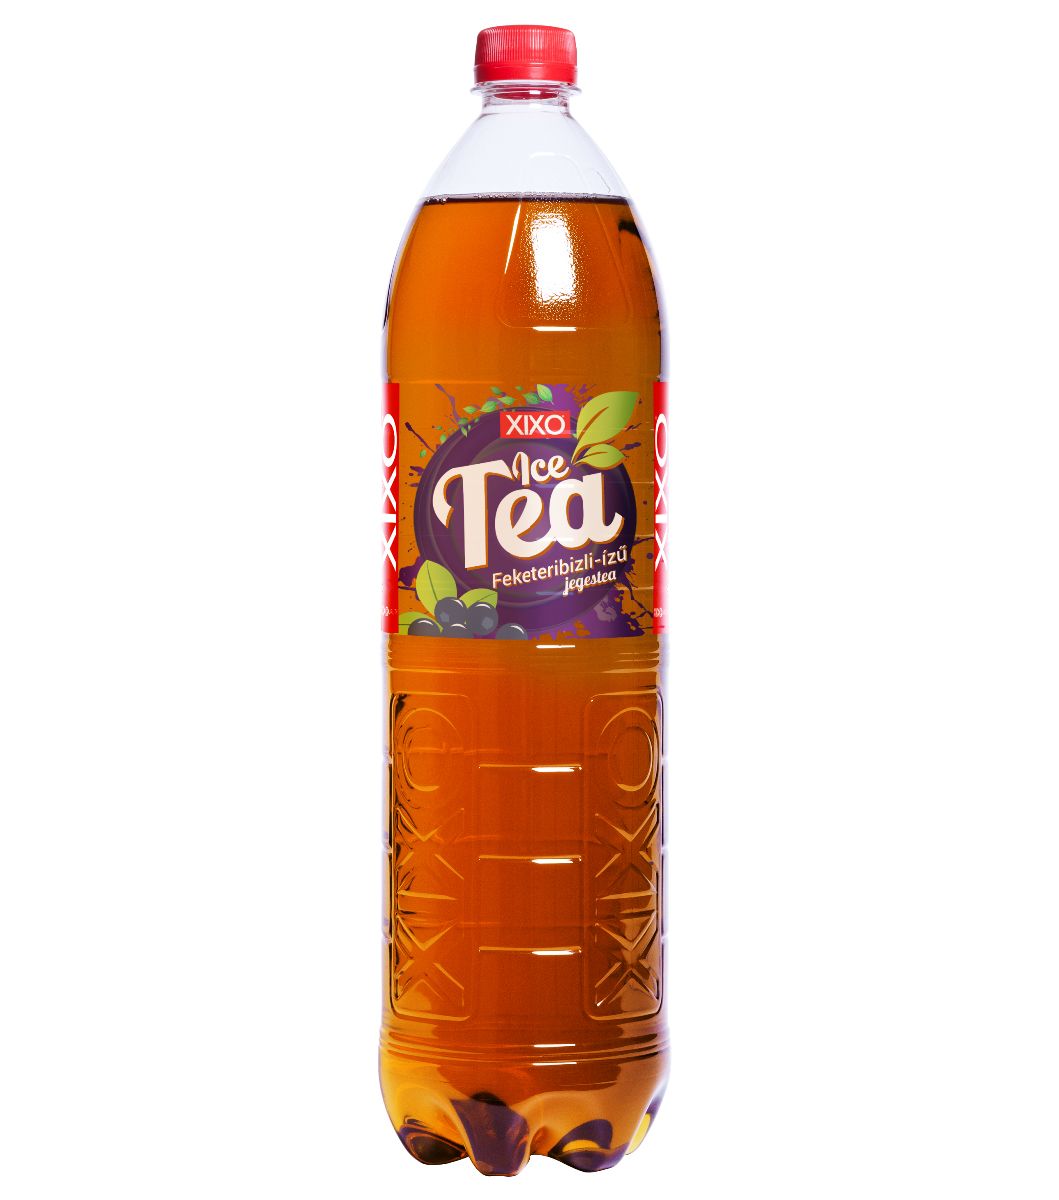 XIXO ICE TEA FEKETERIBIZLI 1,5L PET